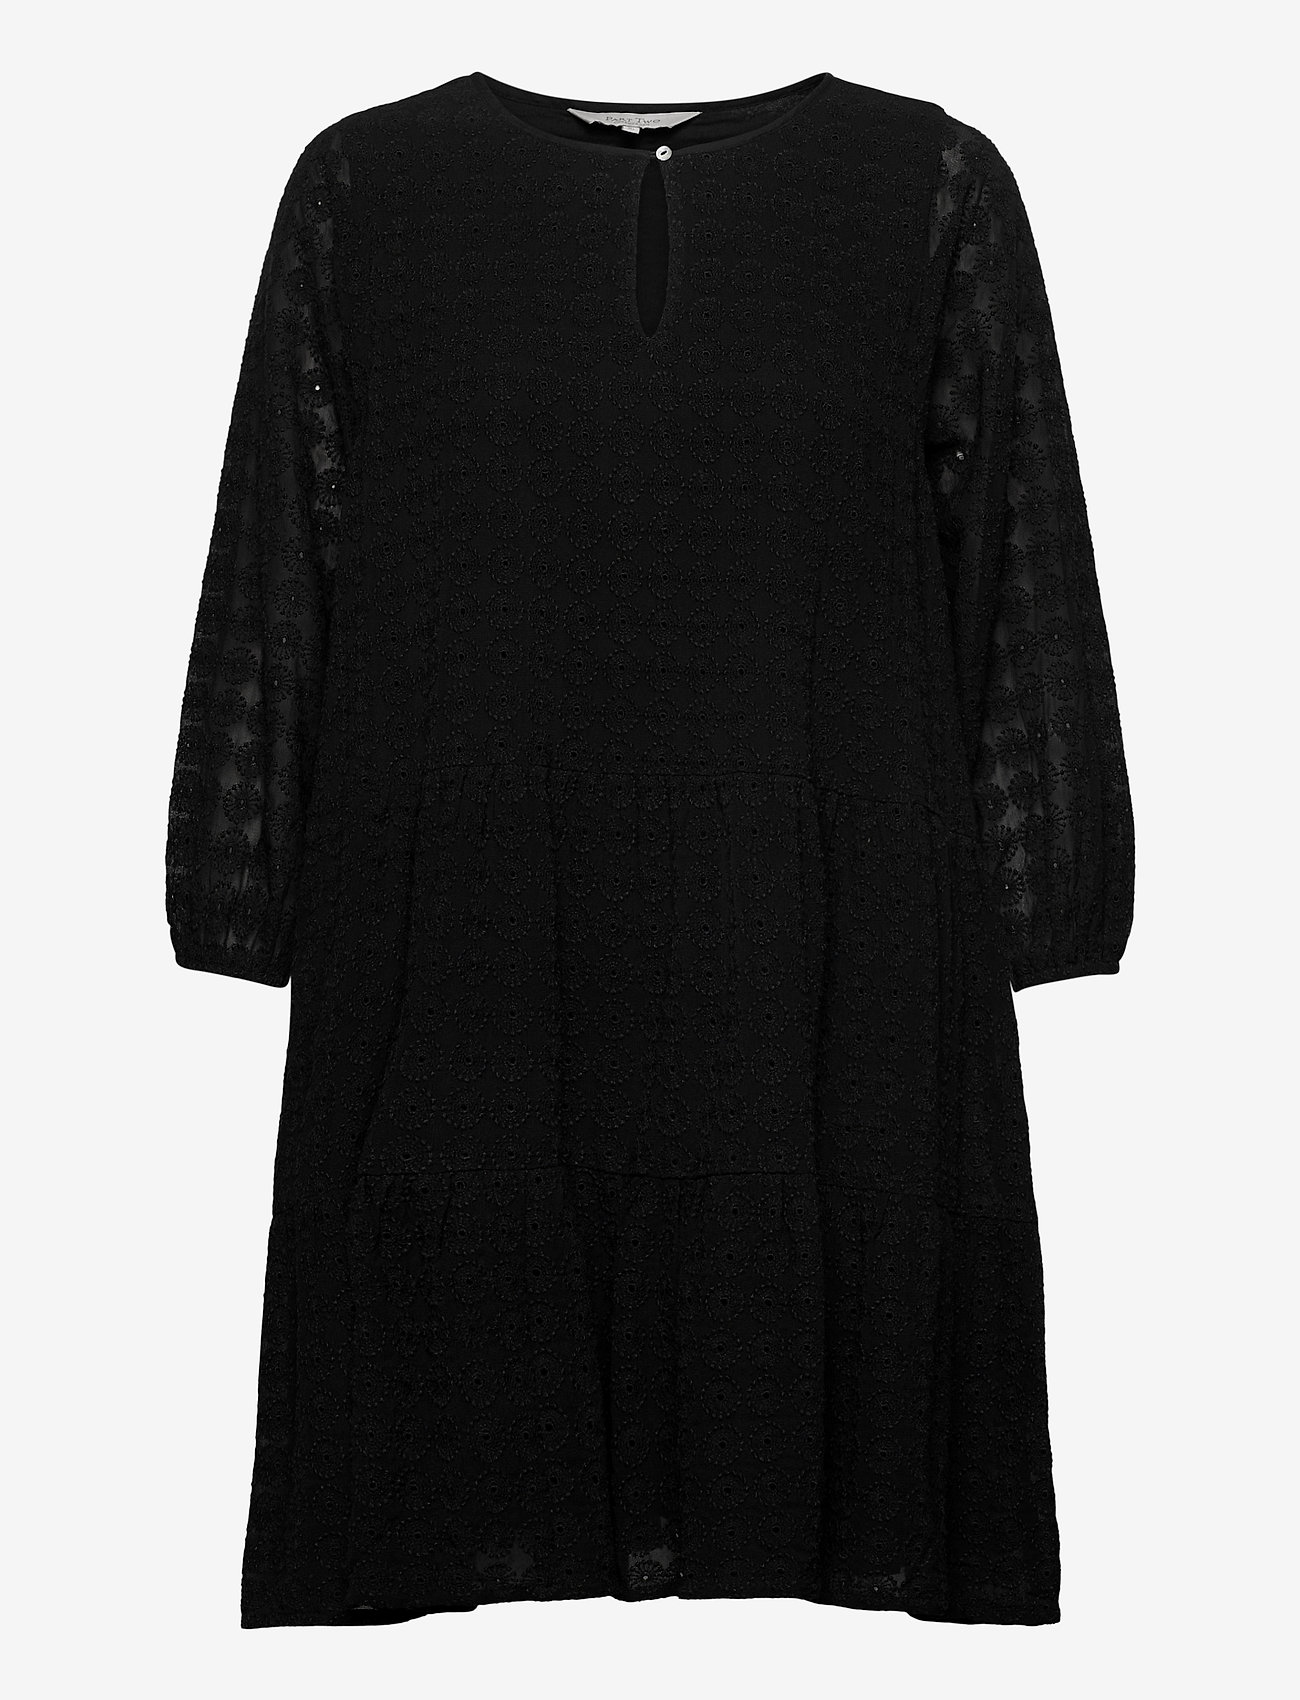 Part Two - EsePW DR - korte jurken - black - 0